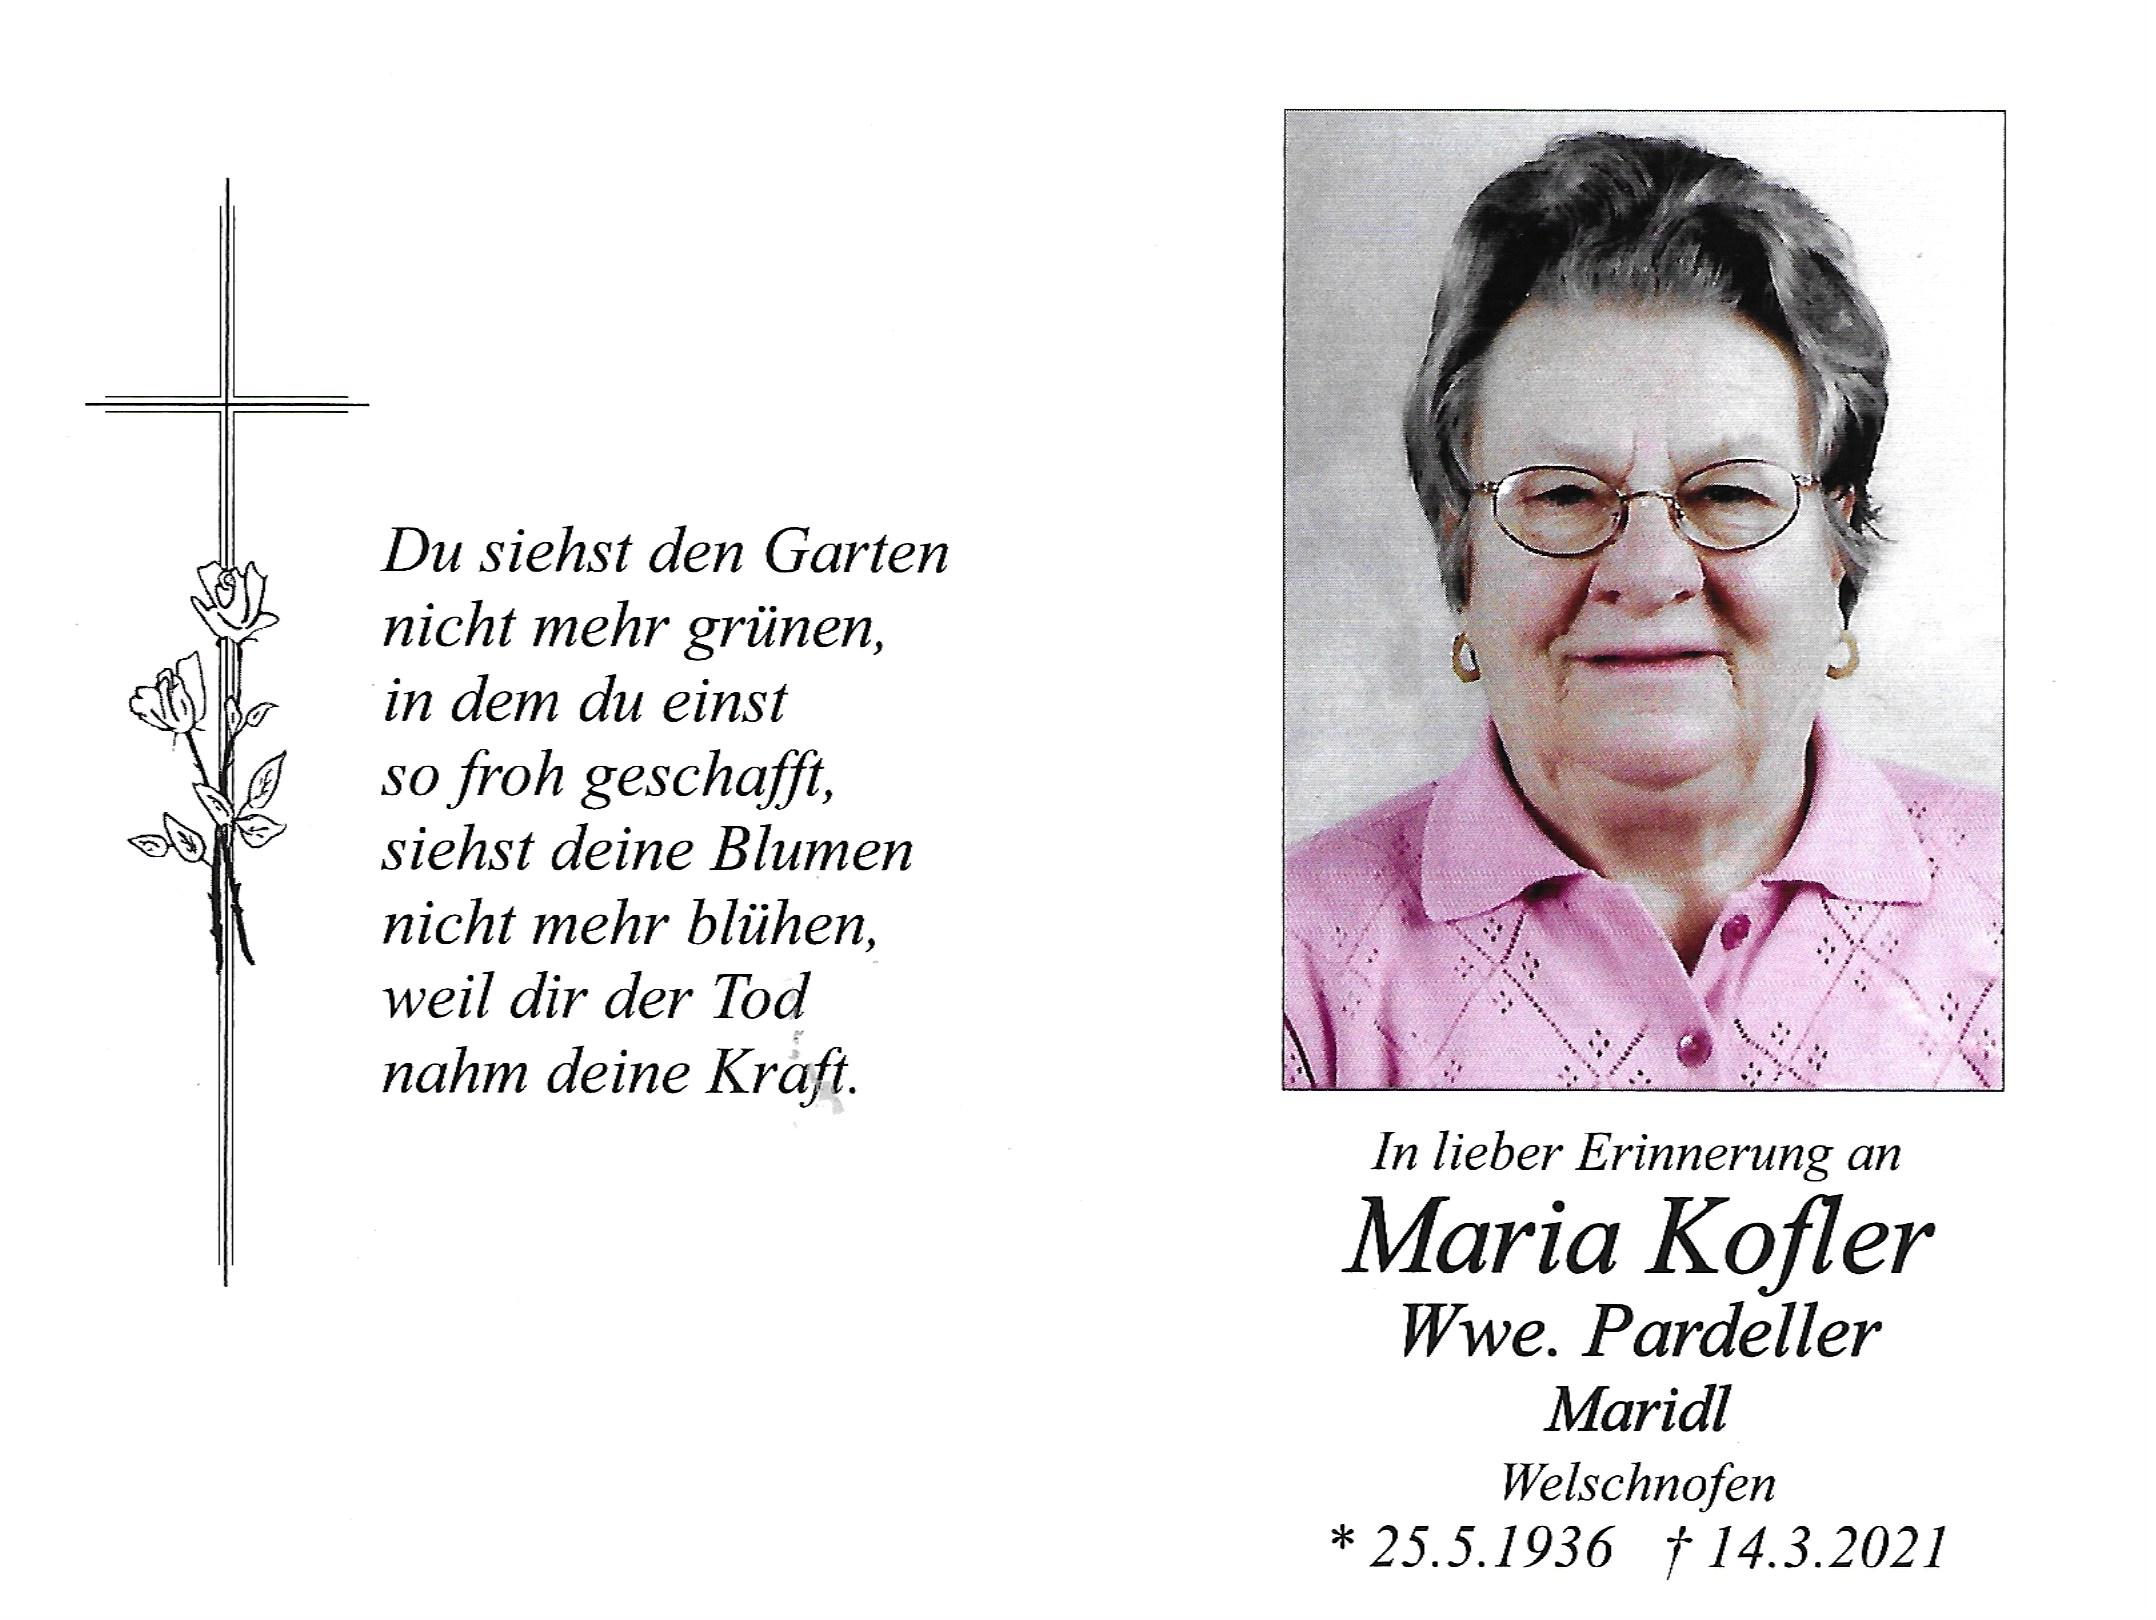 Maria Kofler Wwe. Pardeller